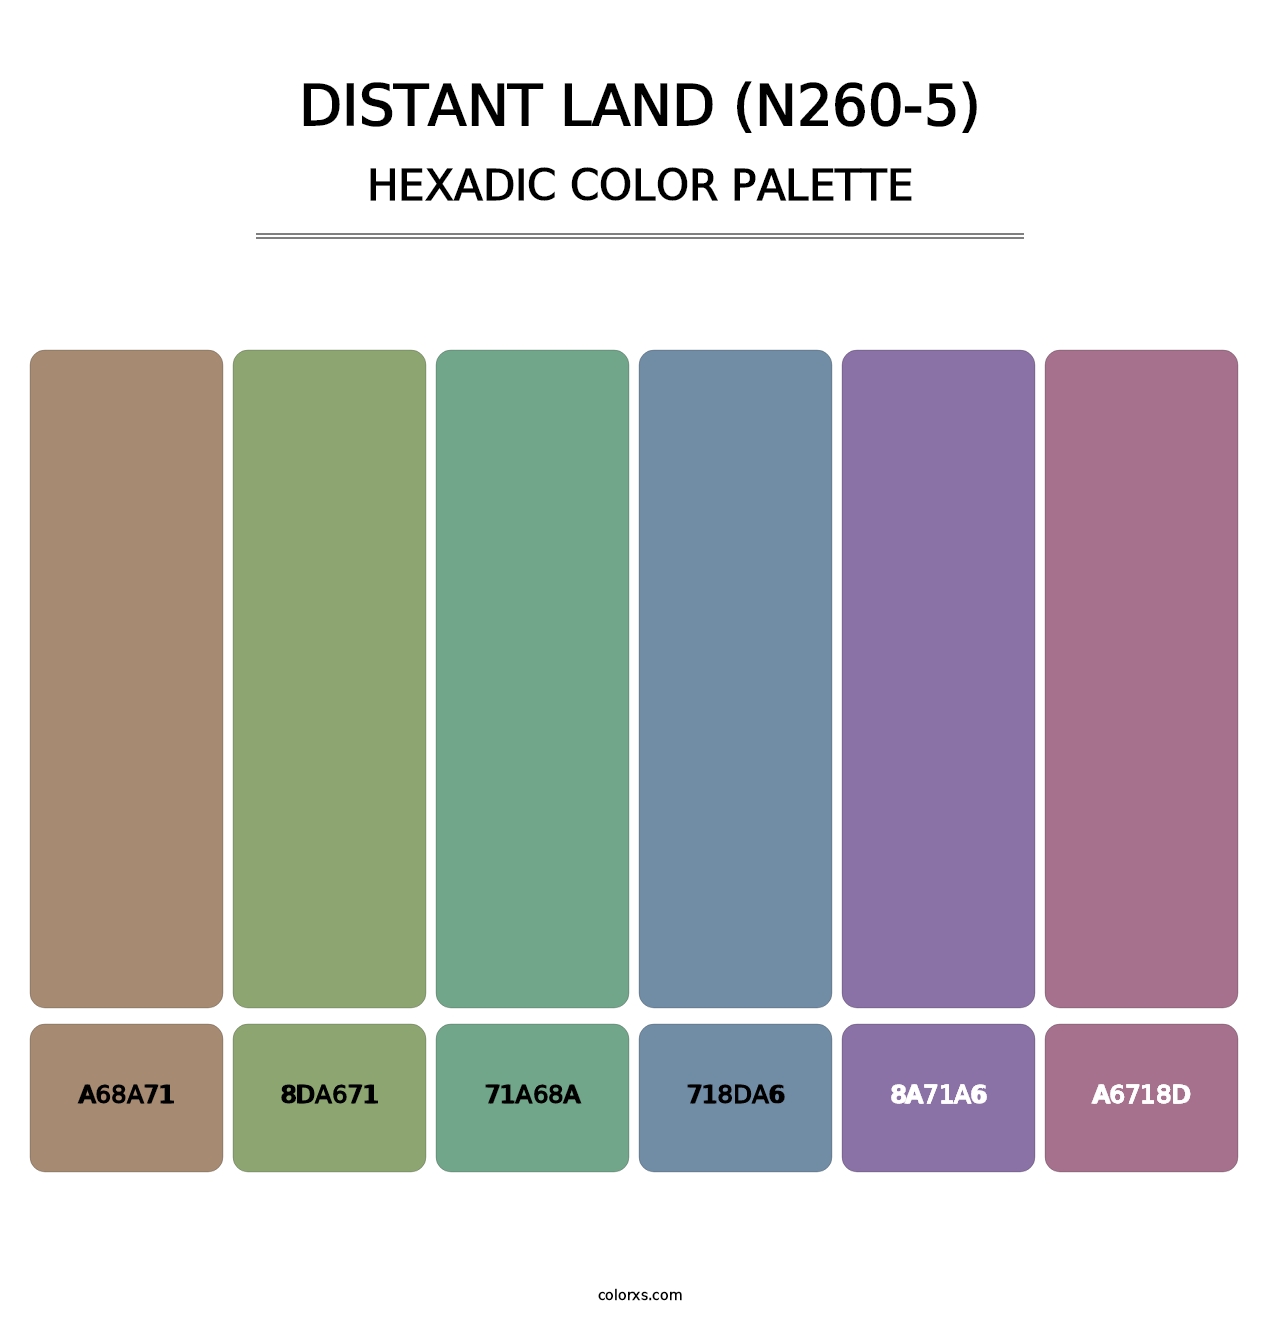 Distant Land (N260-5) - Hexadic Color Palette